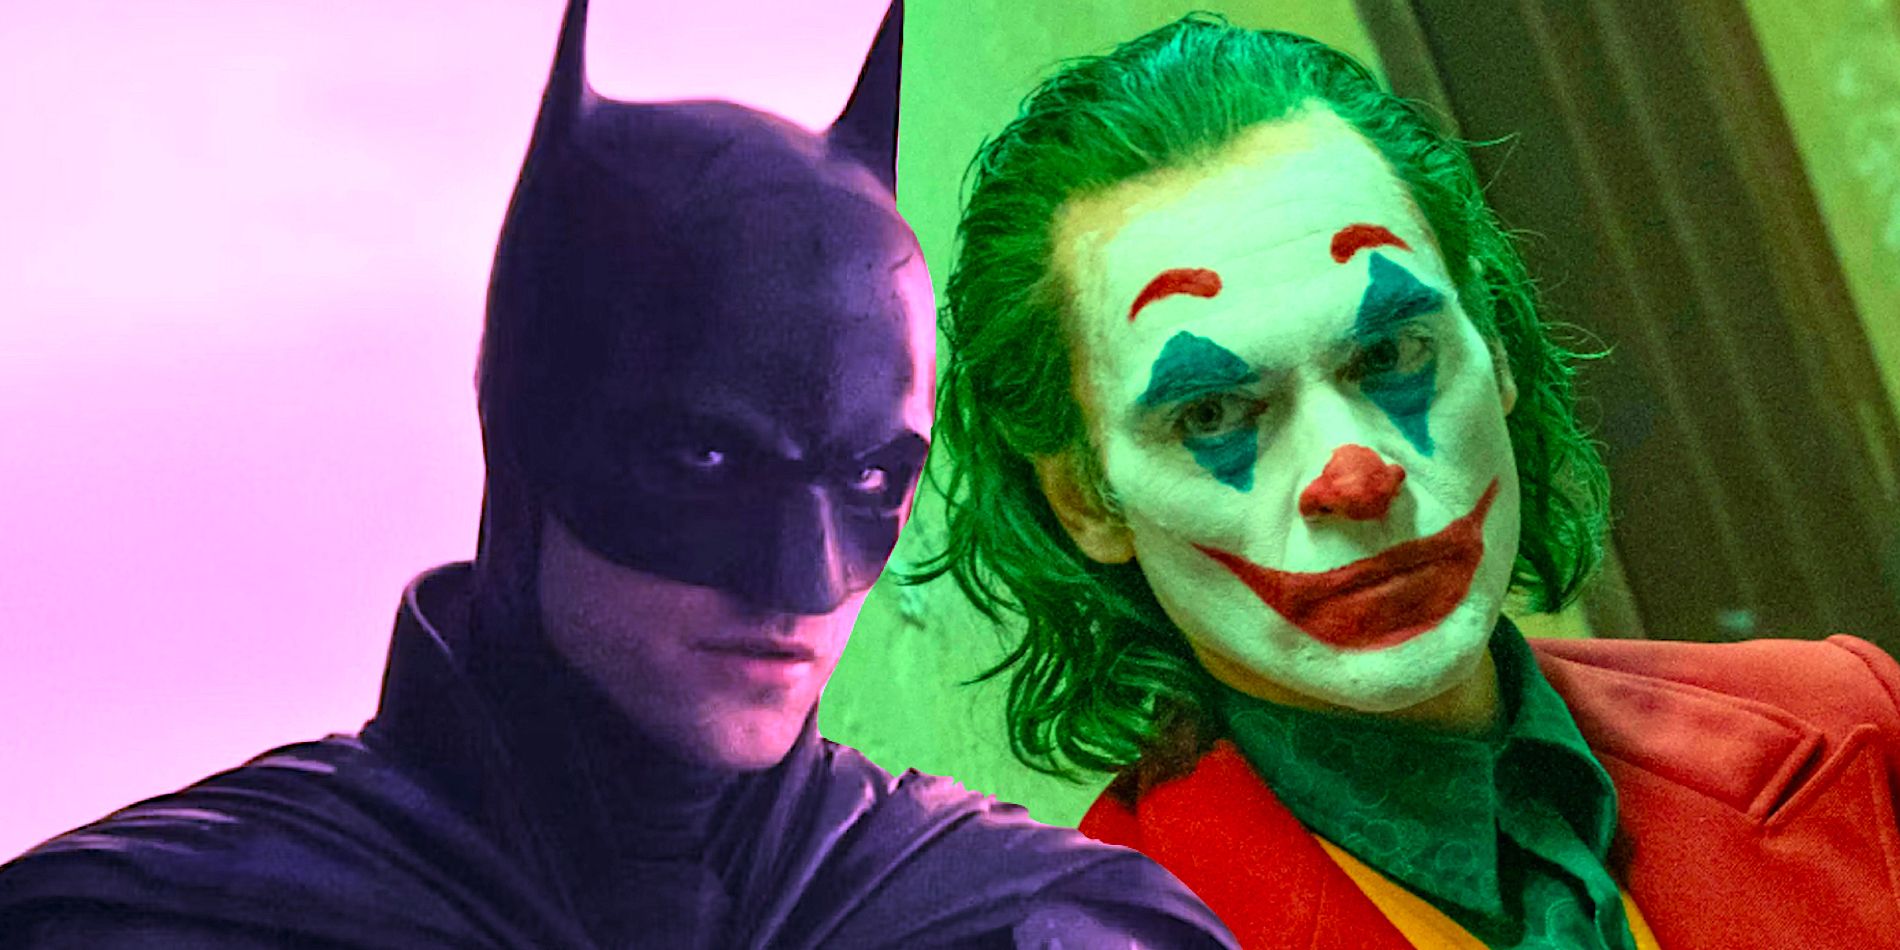 Robert Pattinson in The Batman and Joaquin Phoenix in Joker